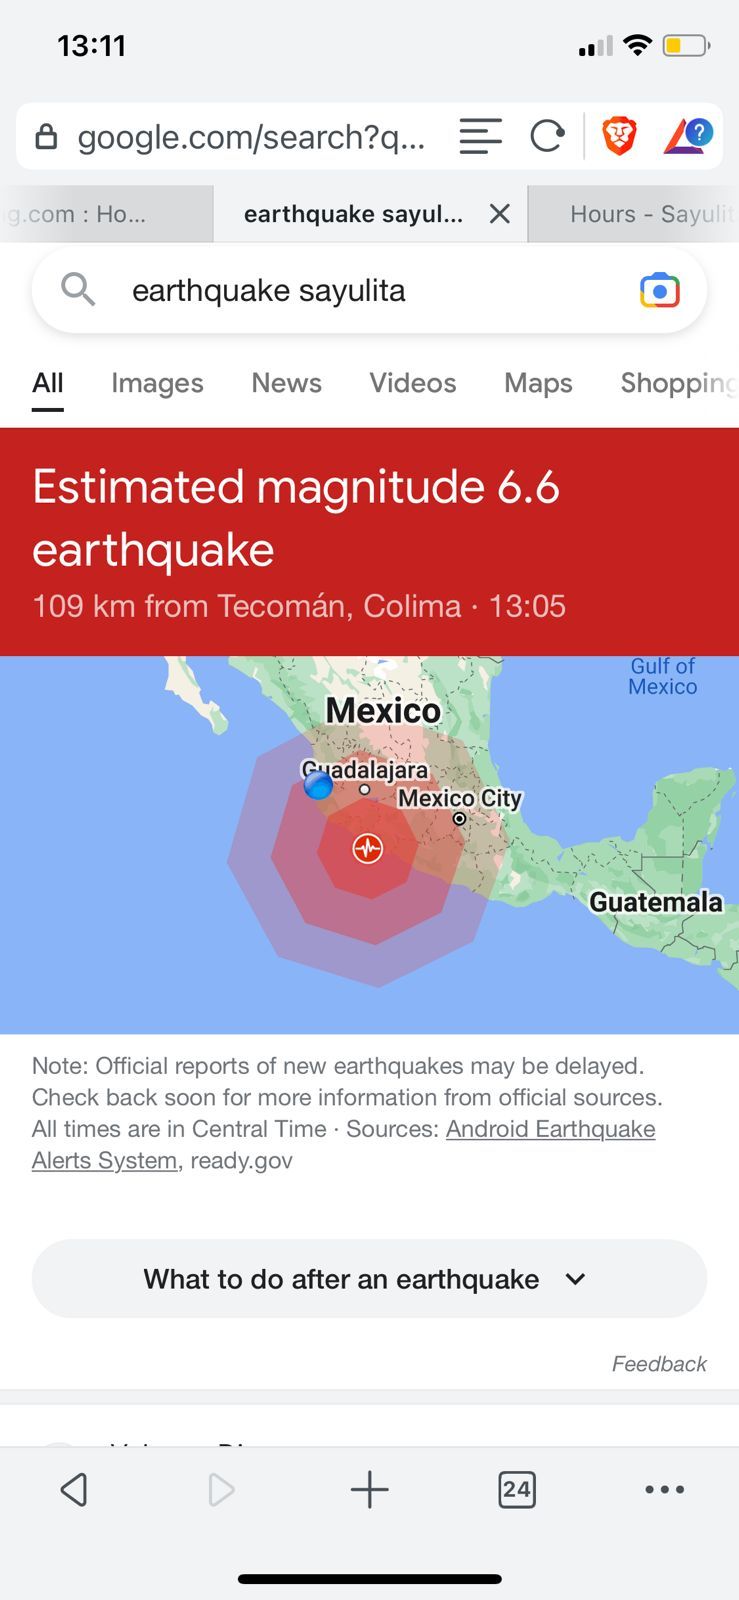 The earthquake